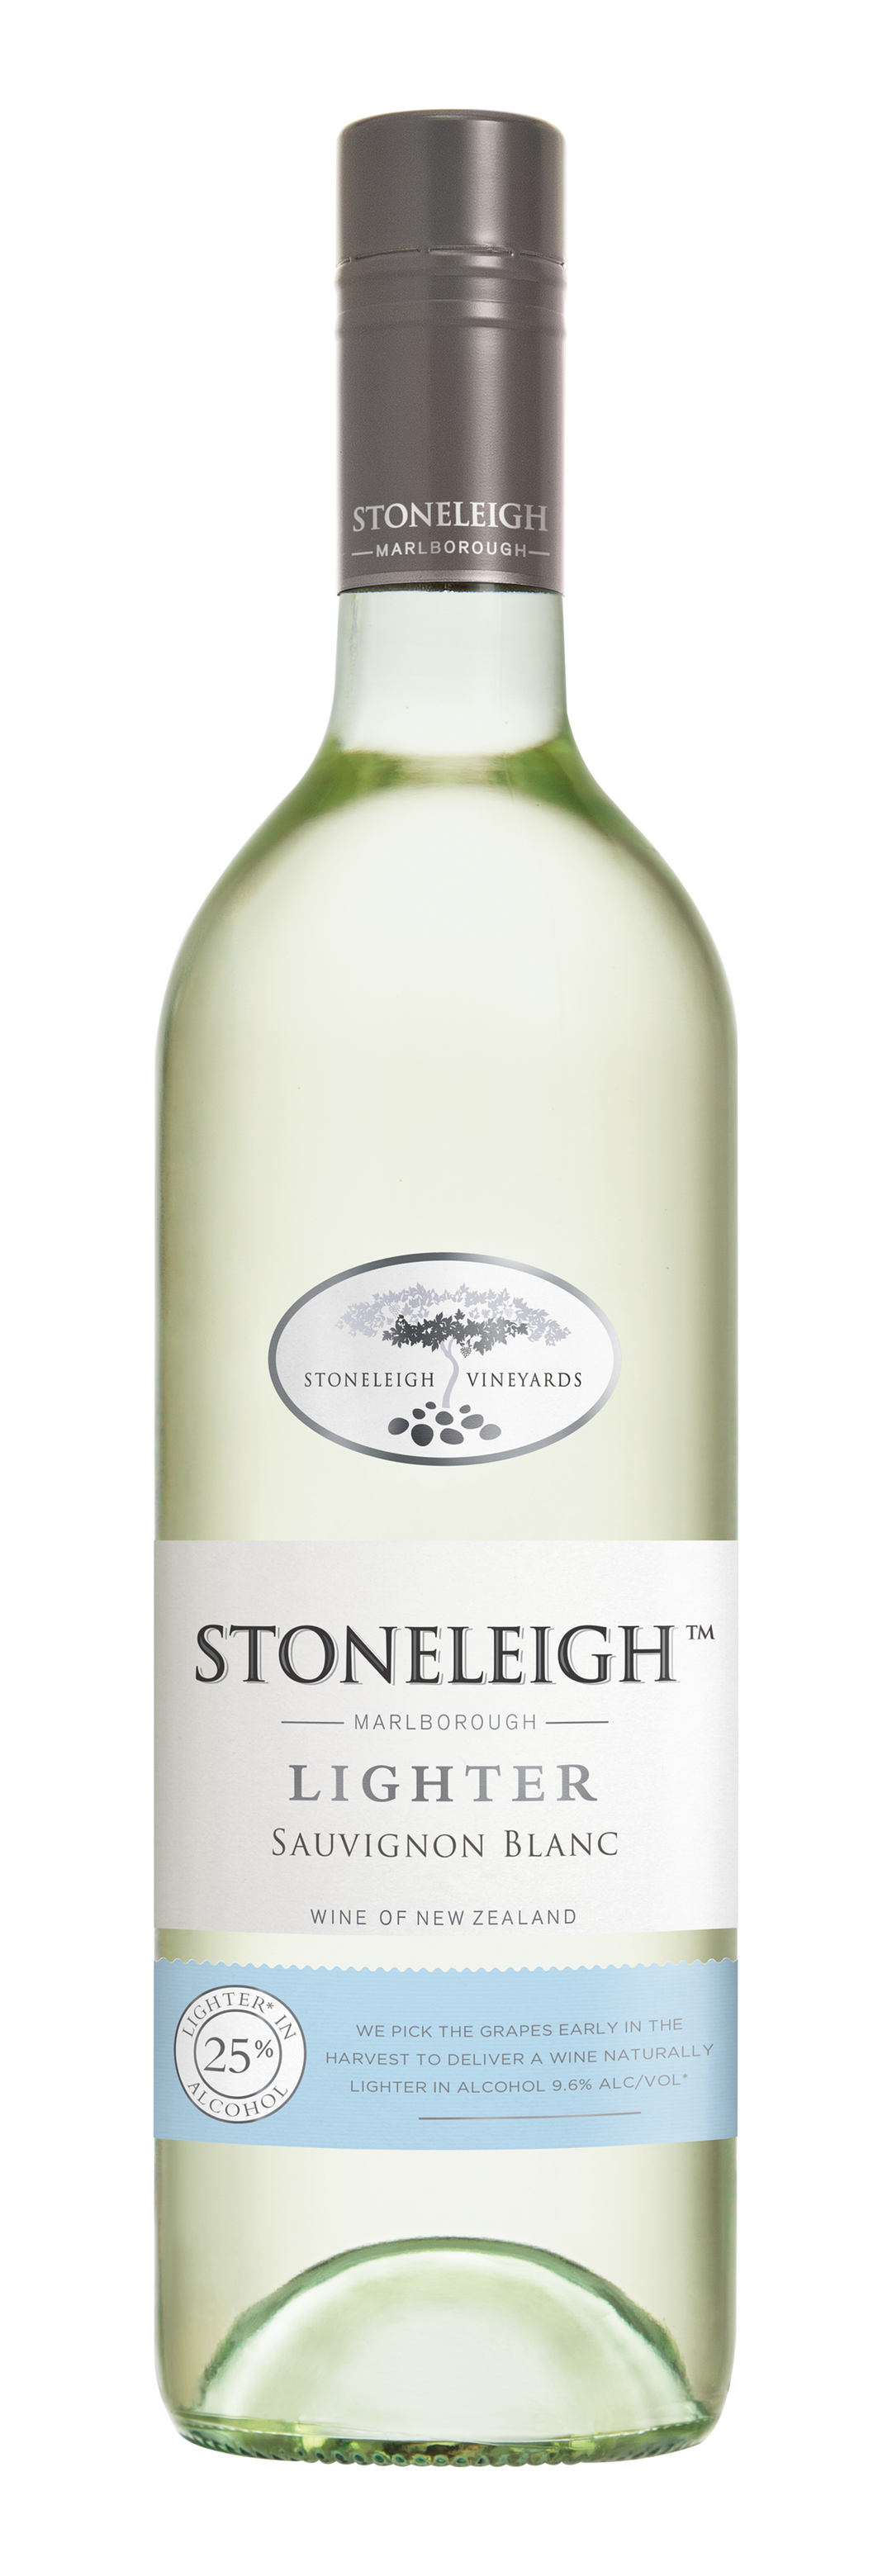 Stoneleigh Low Sauv Blanc